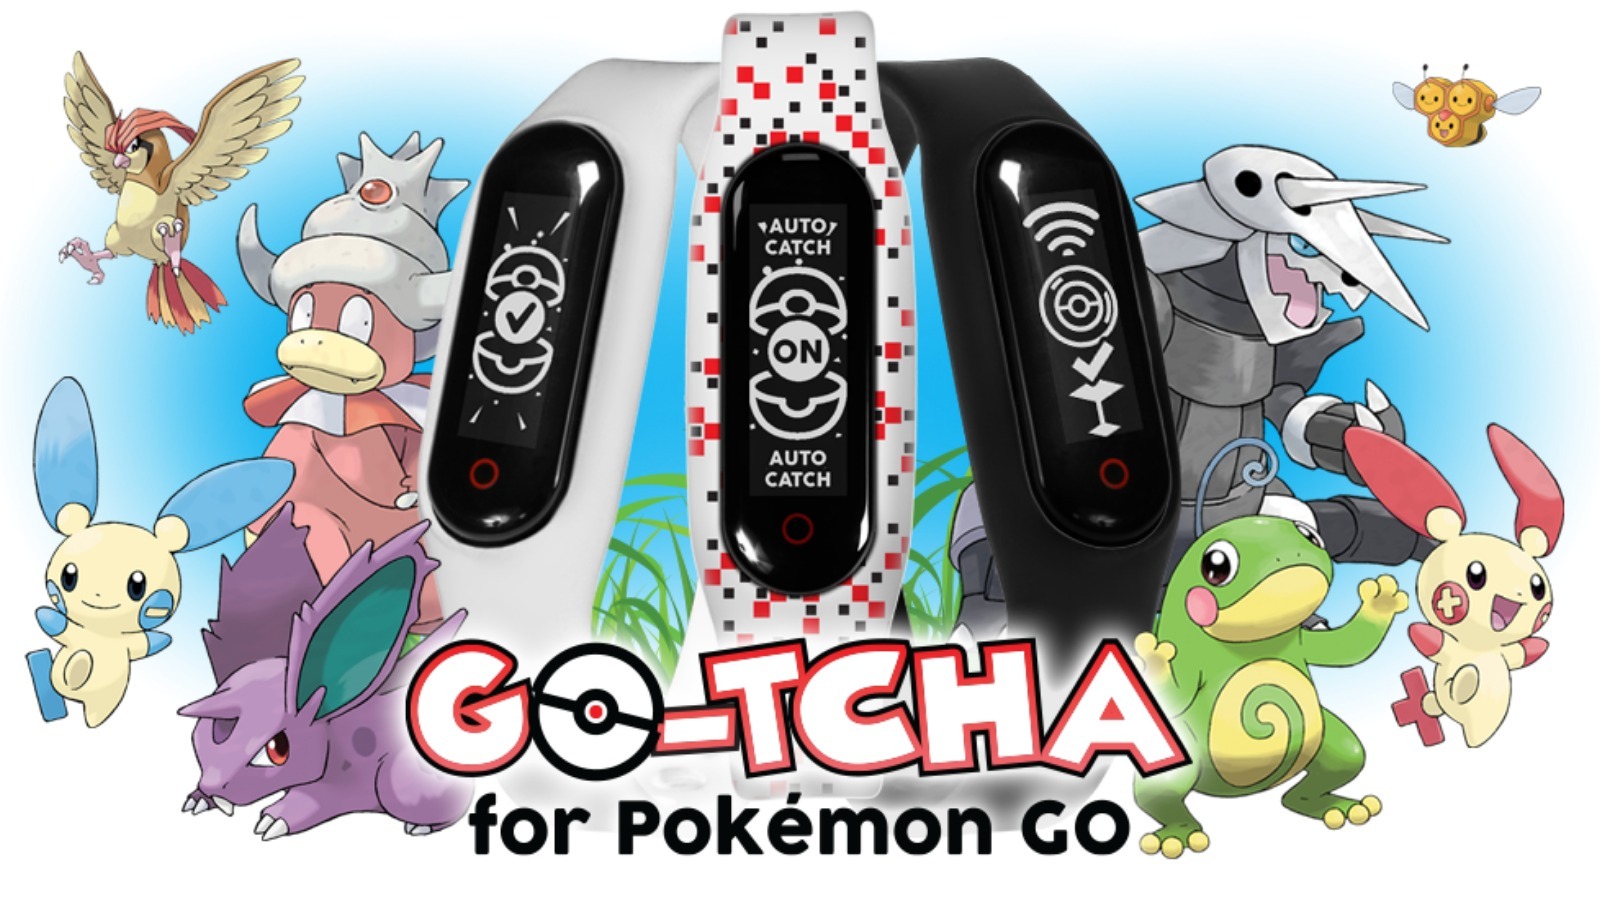 Pokemon Go Auto Catcher Wristband – Roniroo